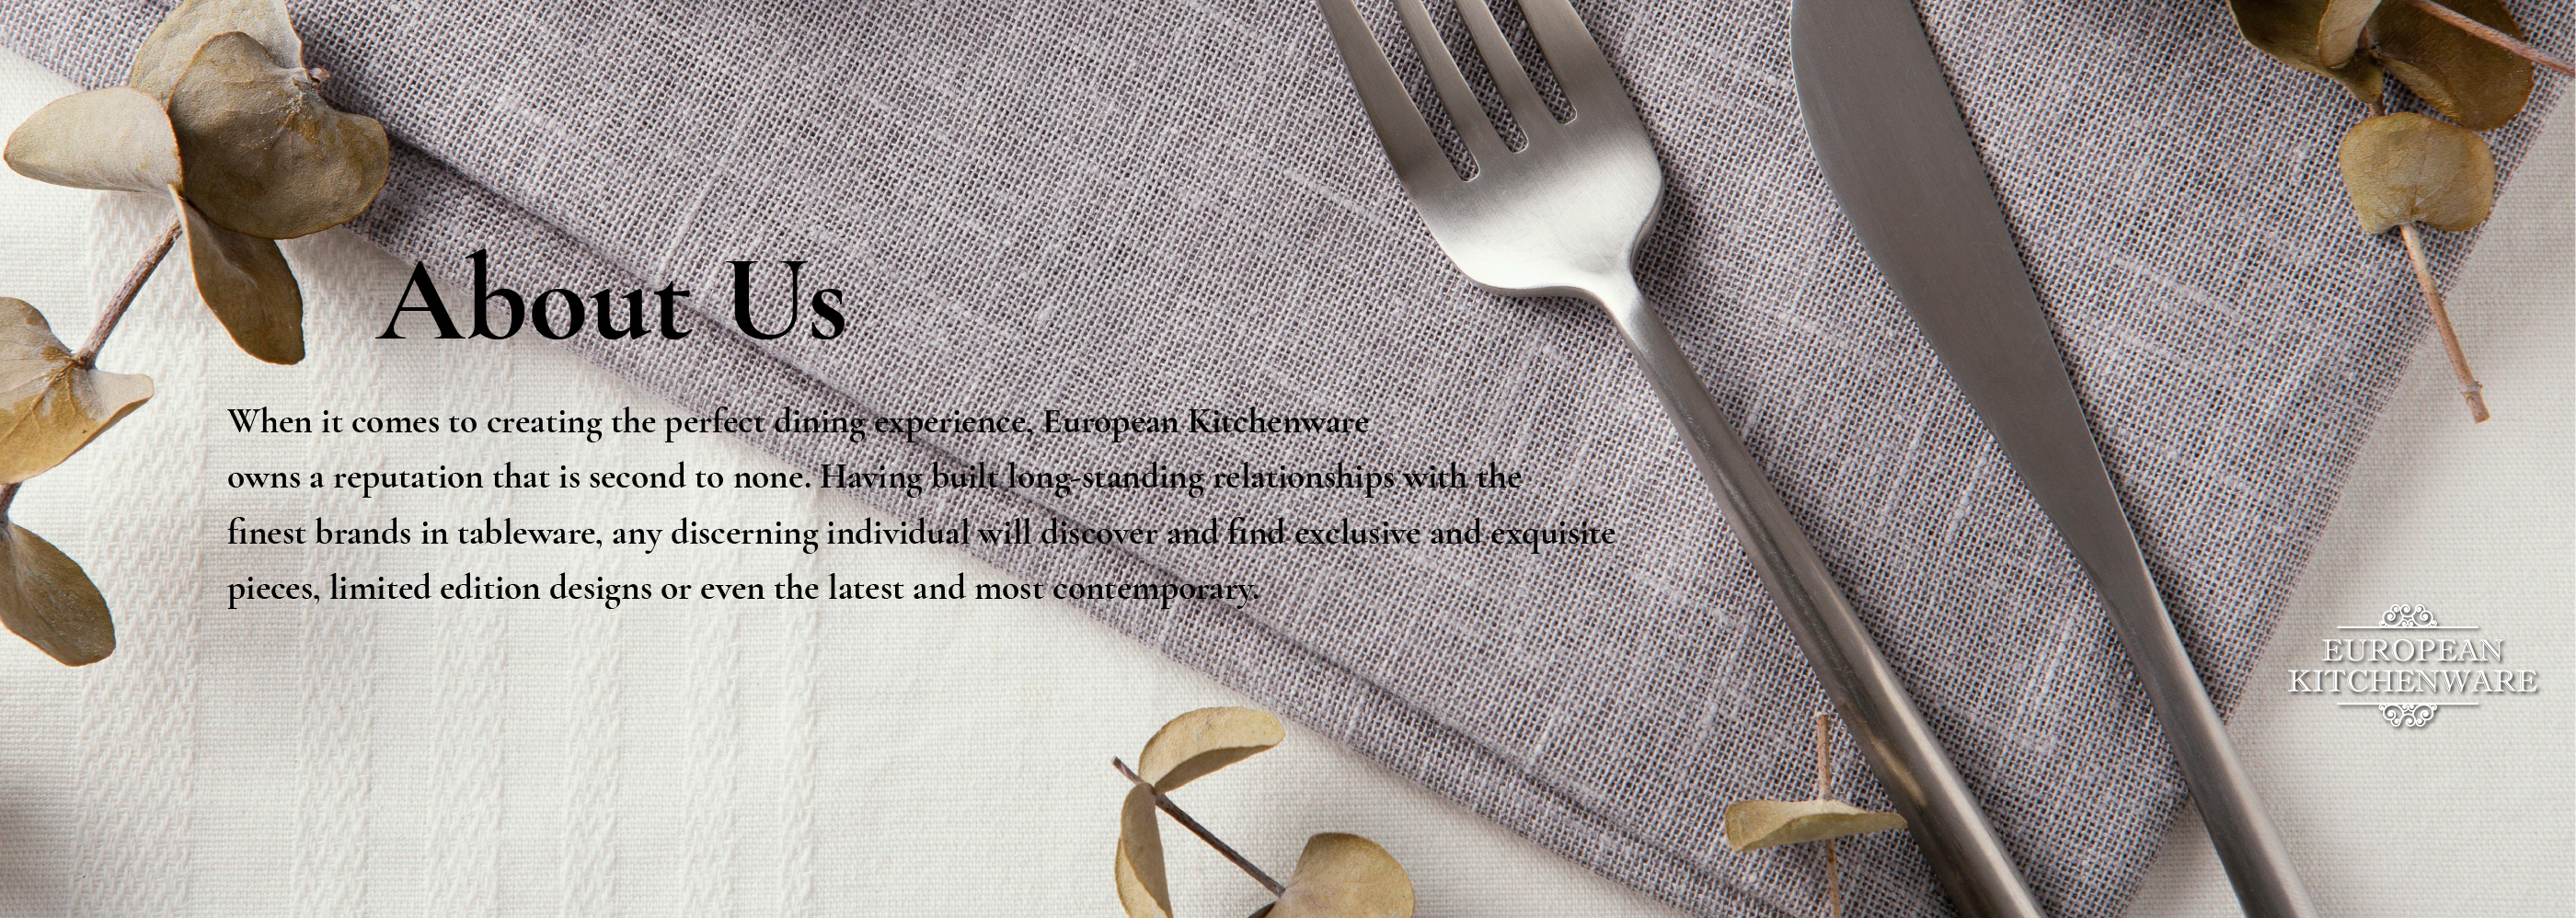 European Kitchenware | 